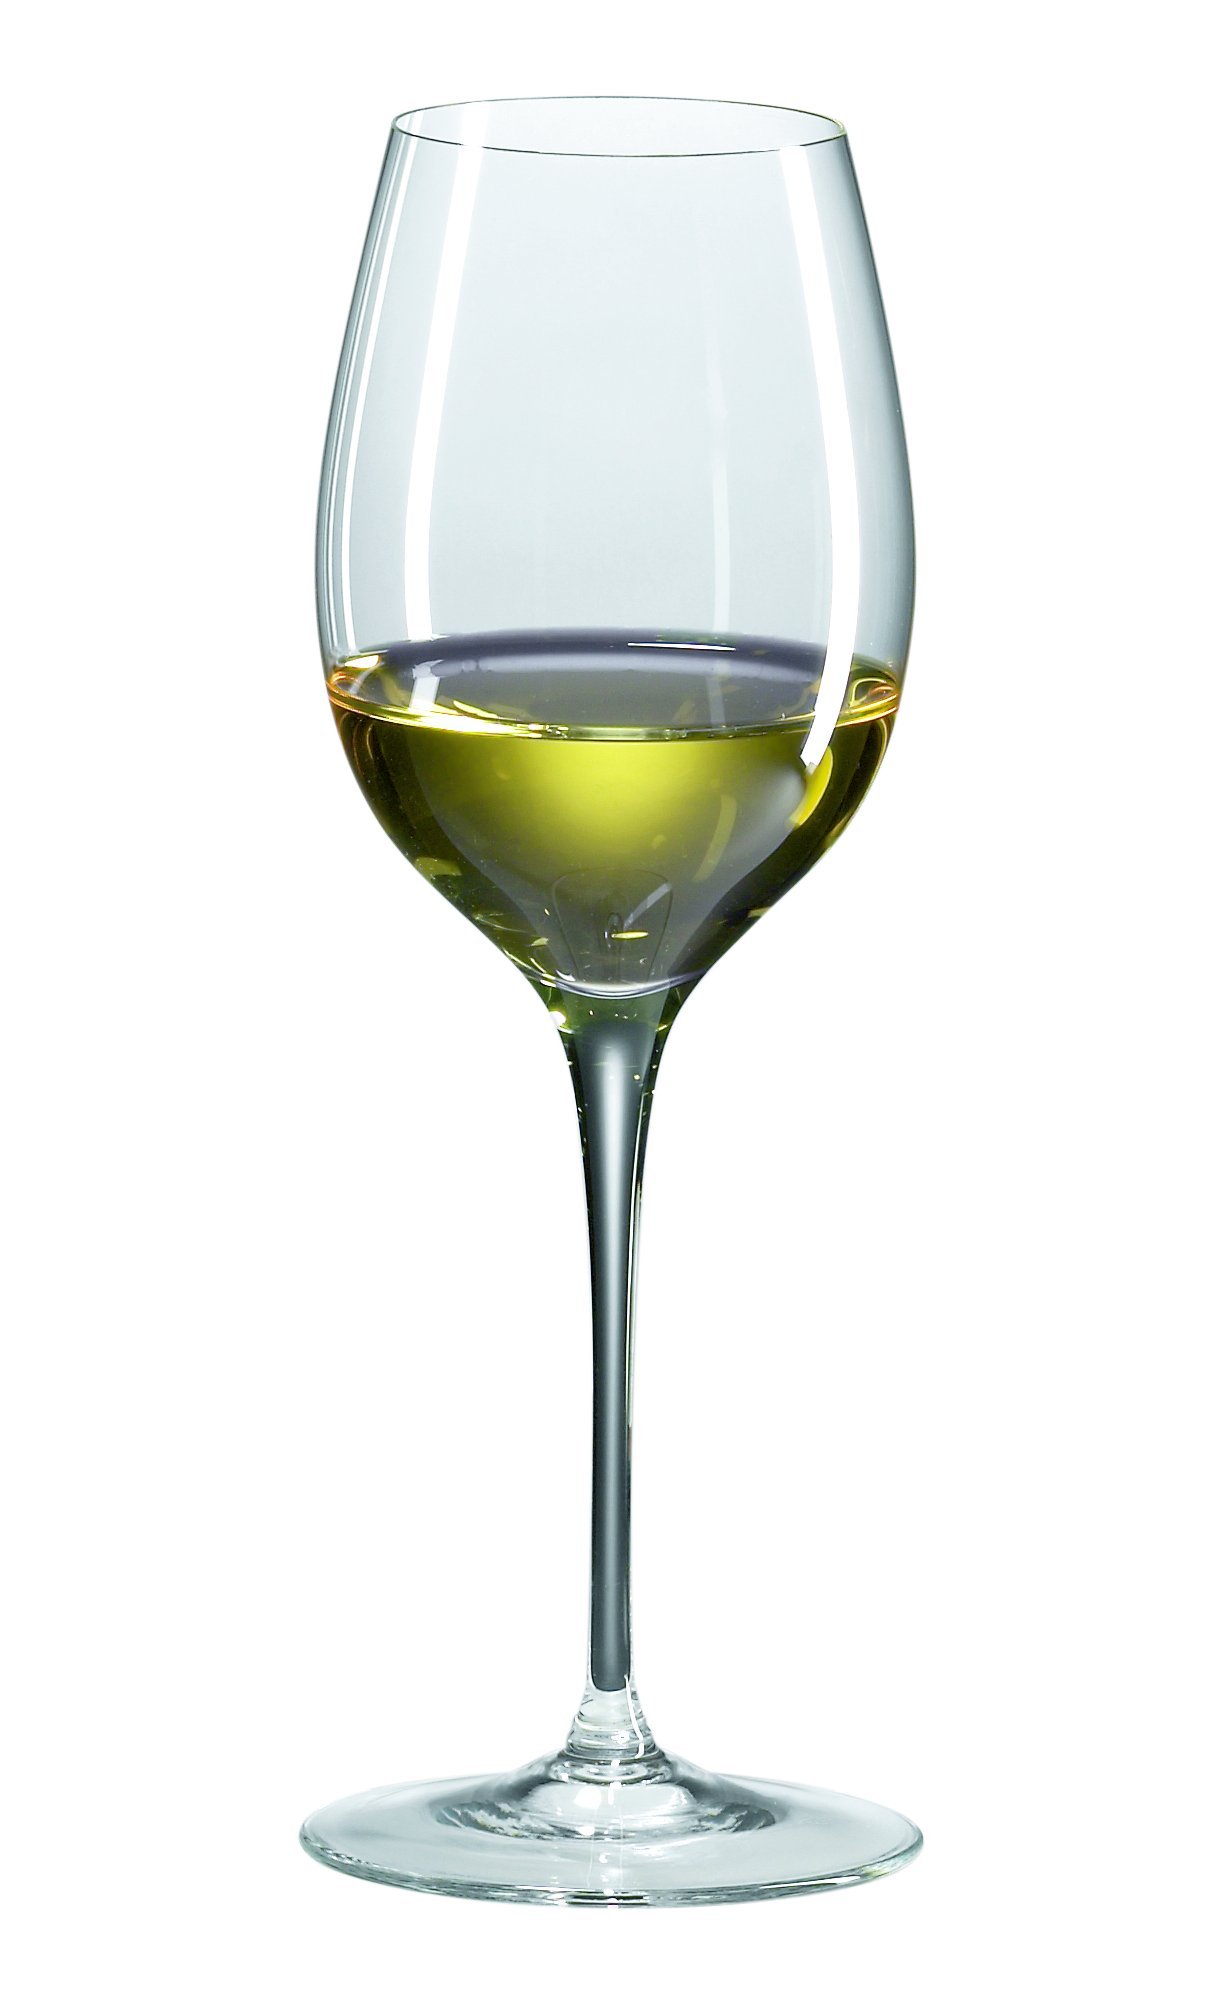 Ravenscroft Crystal Loire/Sauvignon Blanc Glass, Set of 4